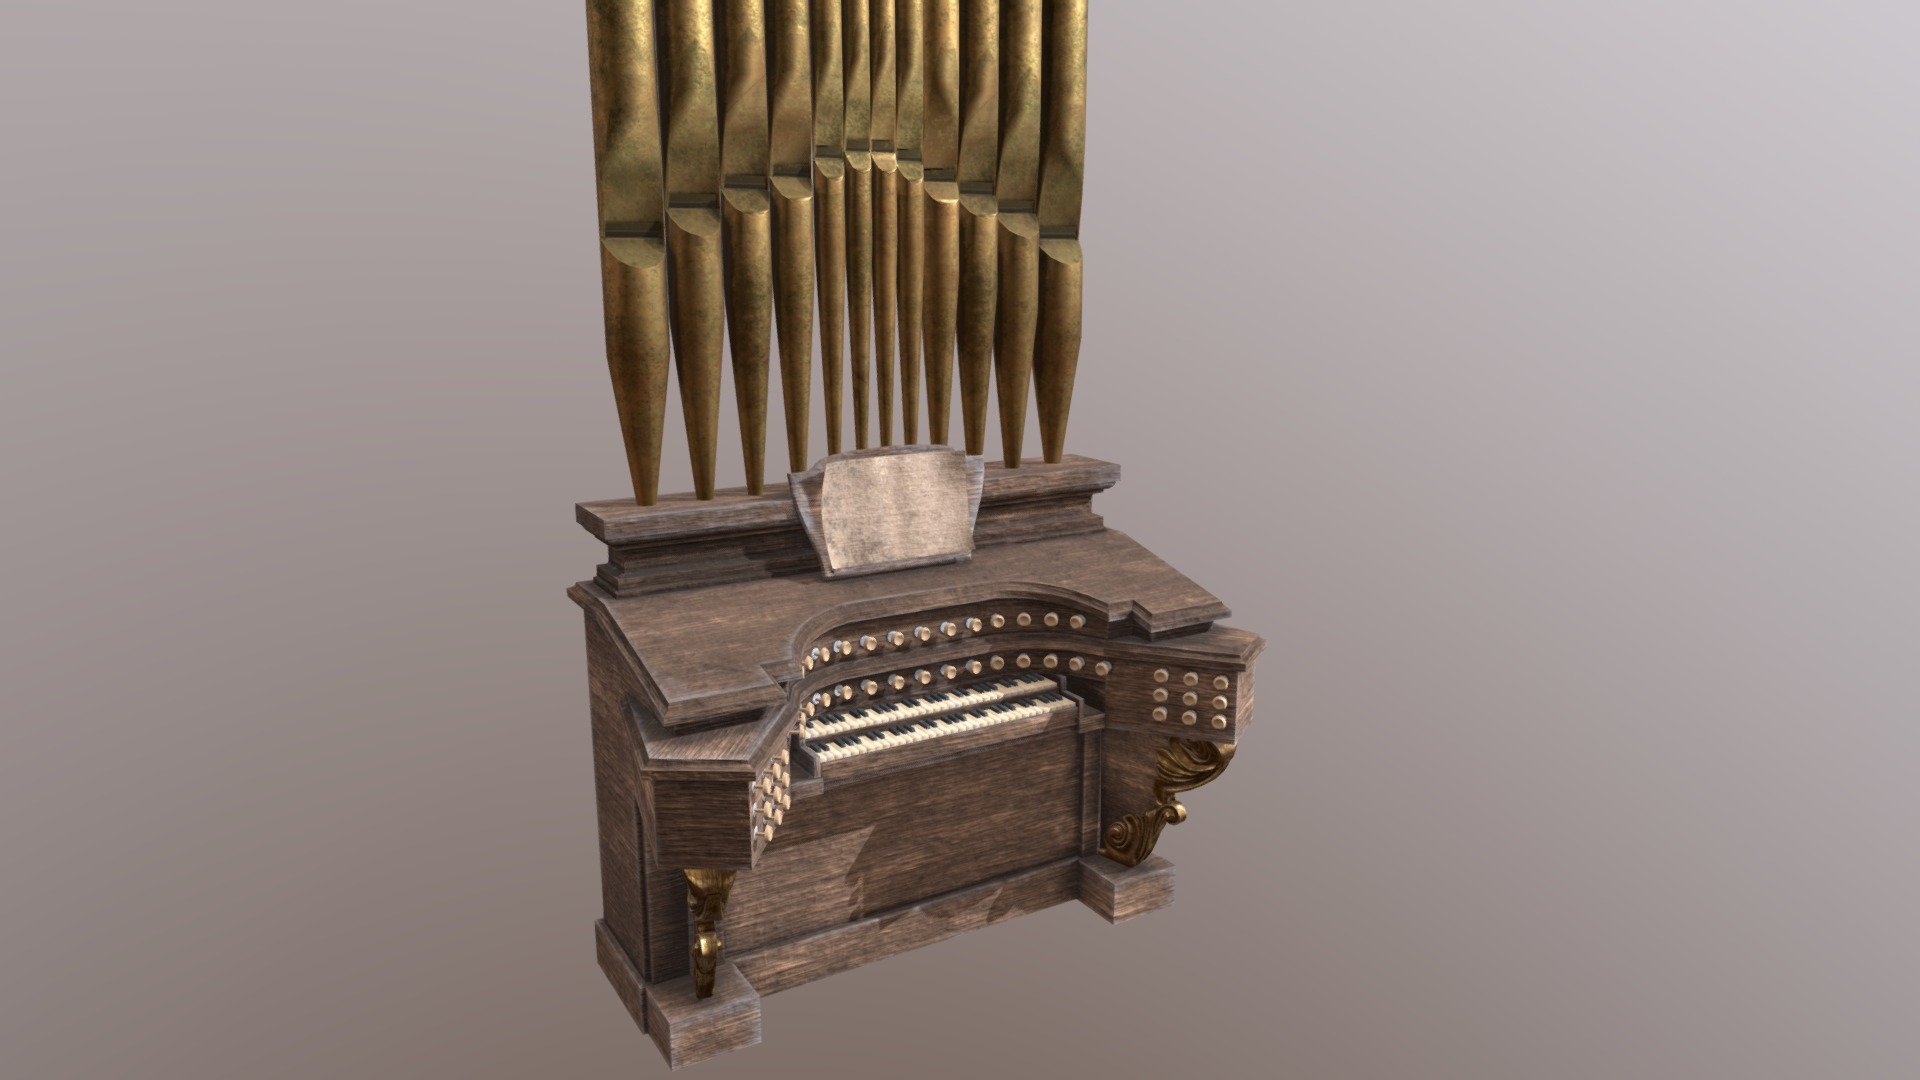 Organ - 3D model by pixeldog4ever 3d model